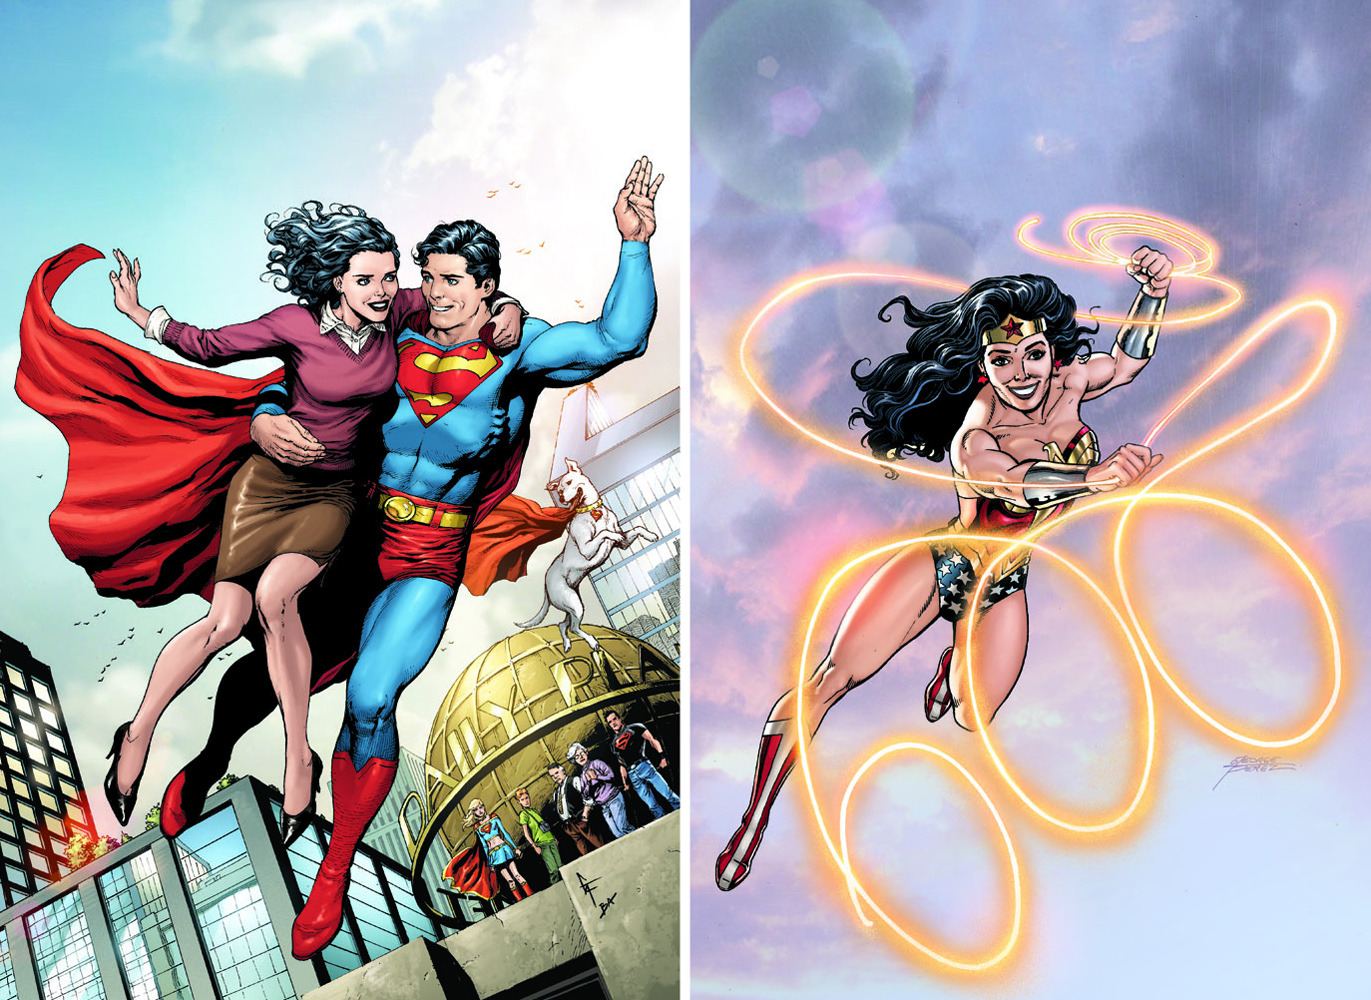 SUperman #700 and Wonder Woman #600